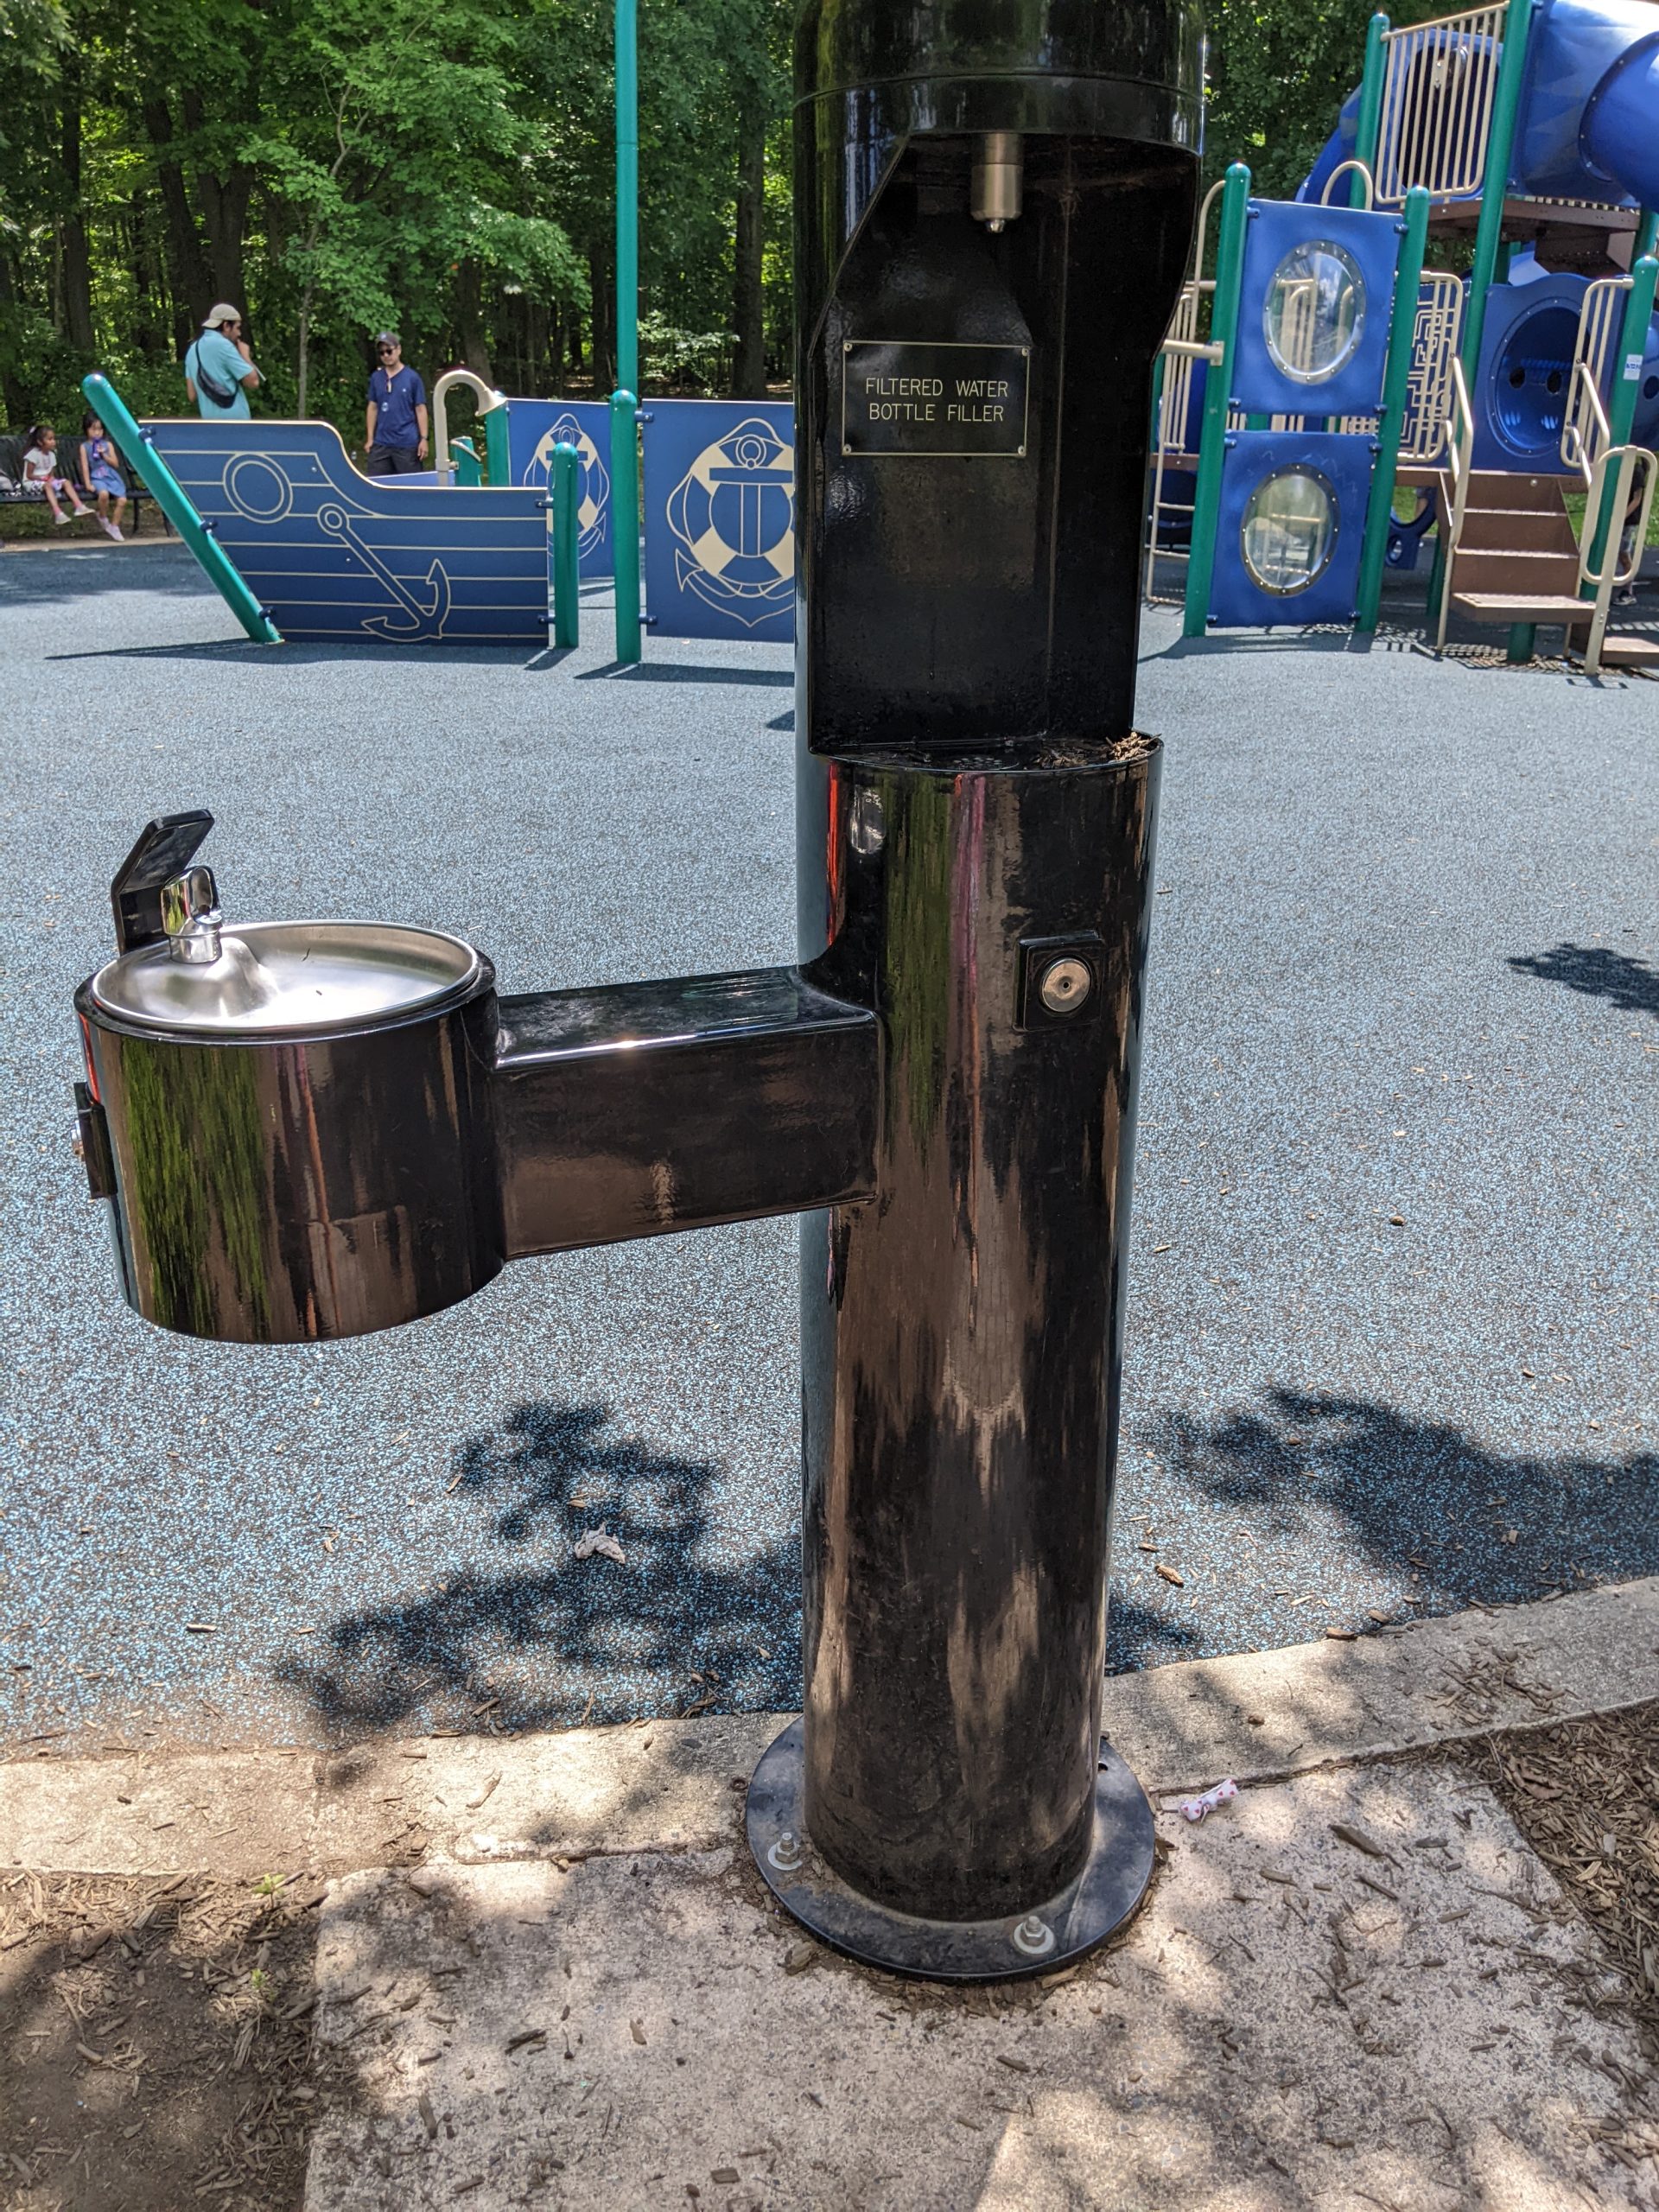 Mercer County Park Playground in West Windsor Township NJ Filtered water bottle filler